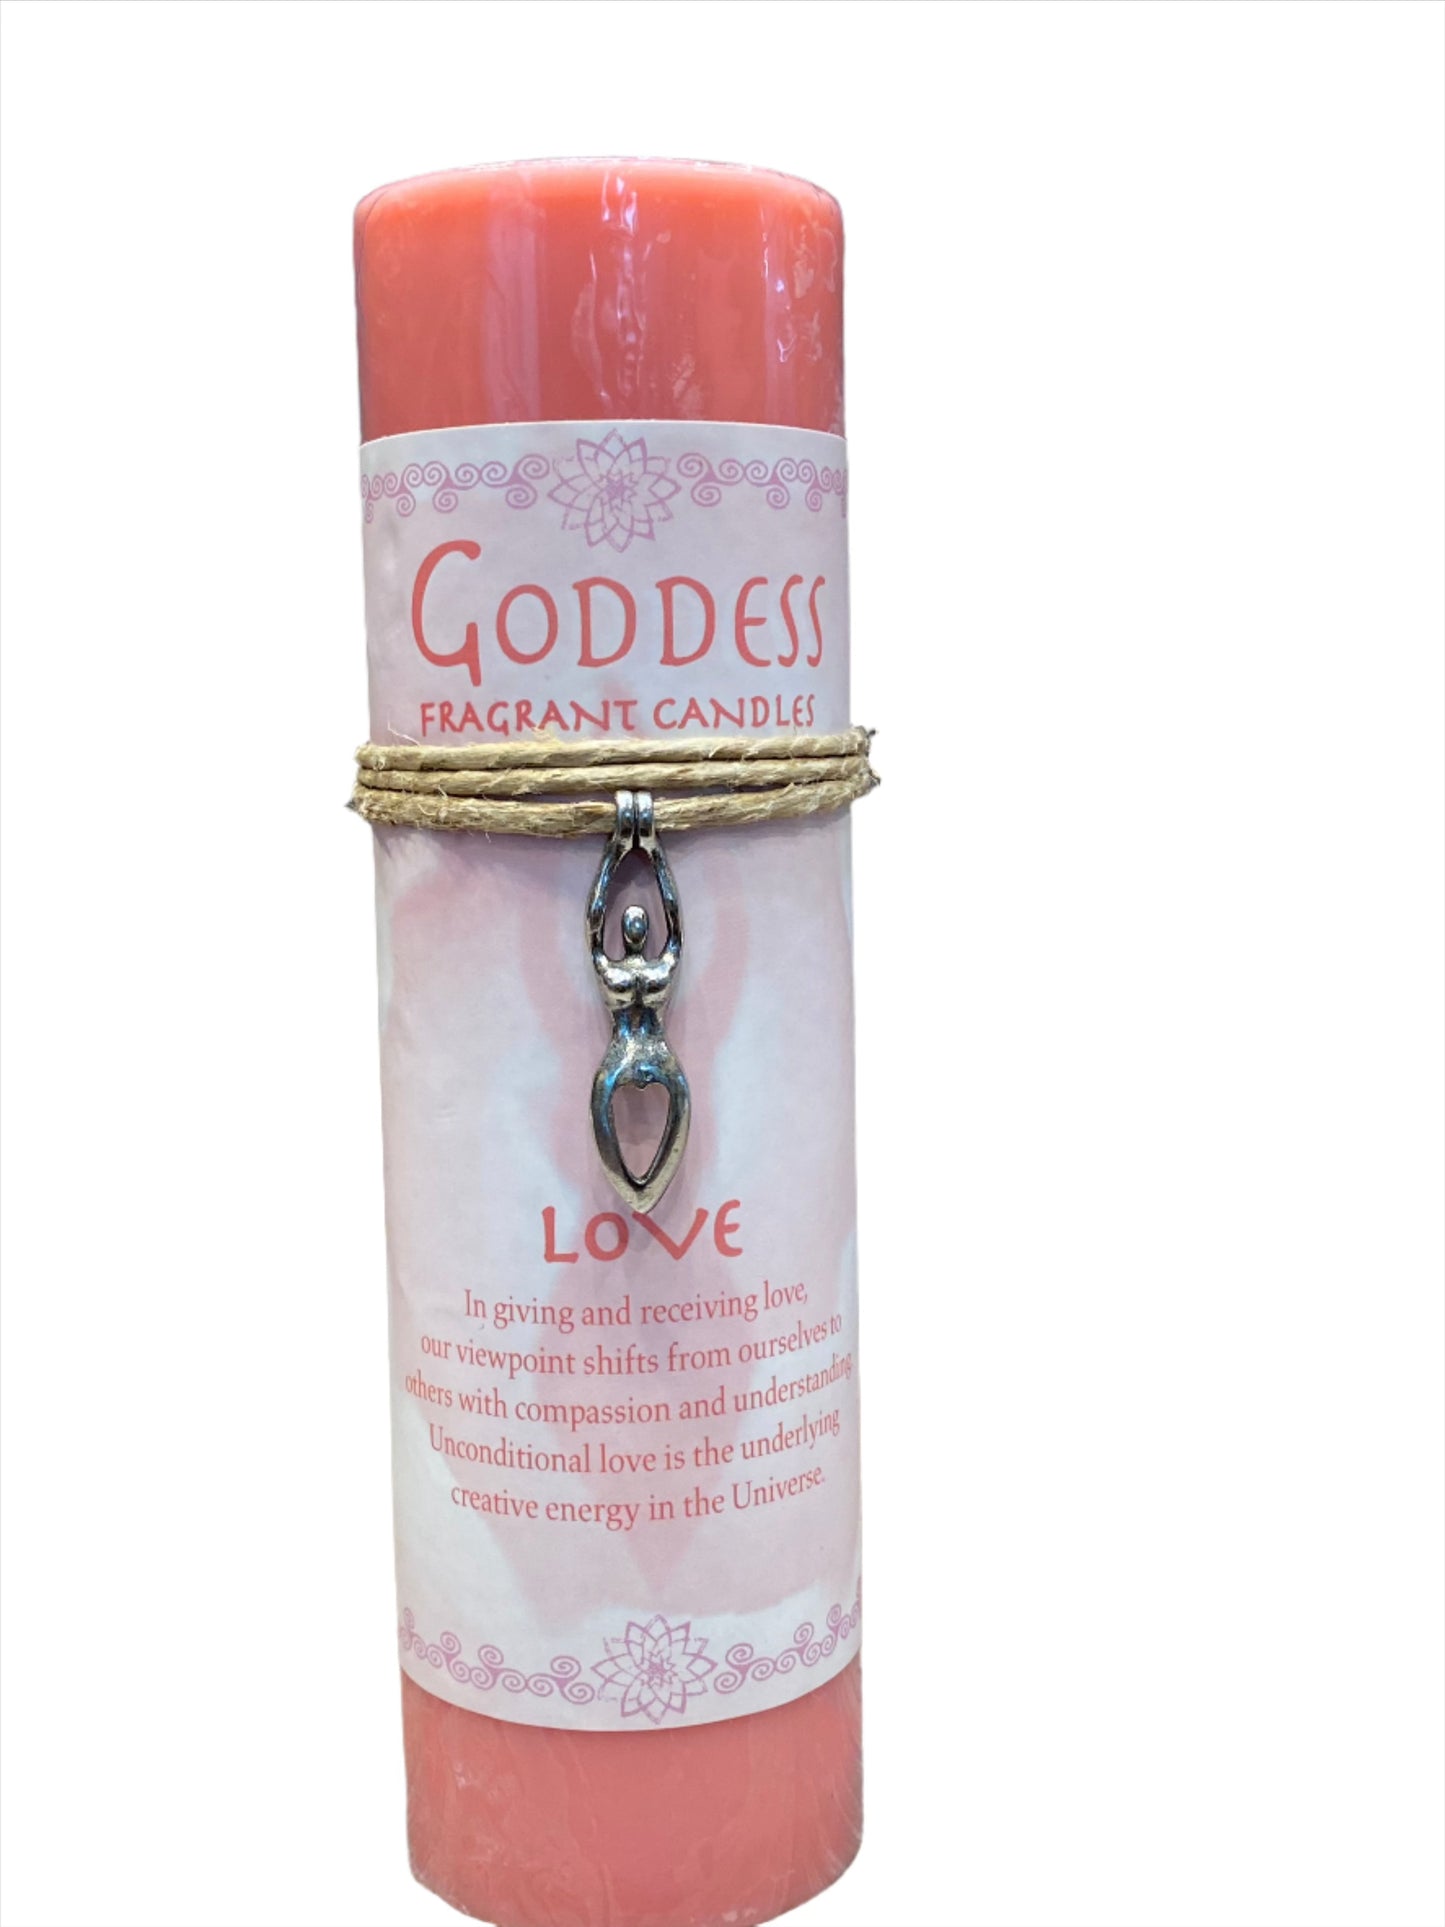 Goddess Fragrance Candle Love